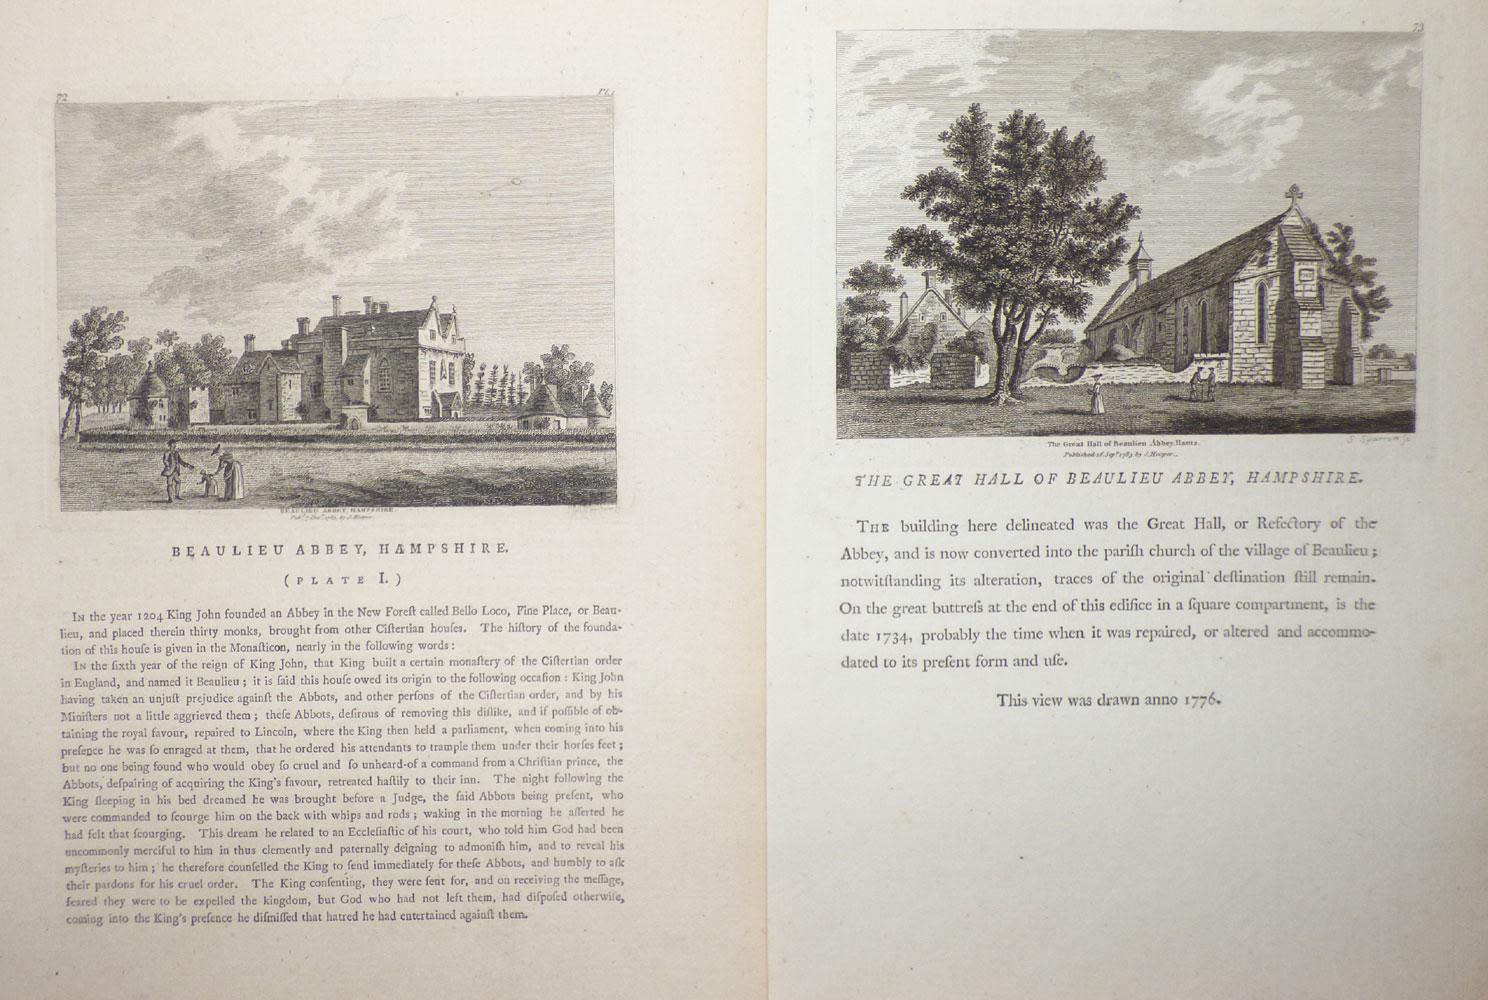 Hampshire grabado por S Beaulieu Abbey Sparrow Publicado en 1776 